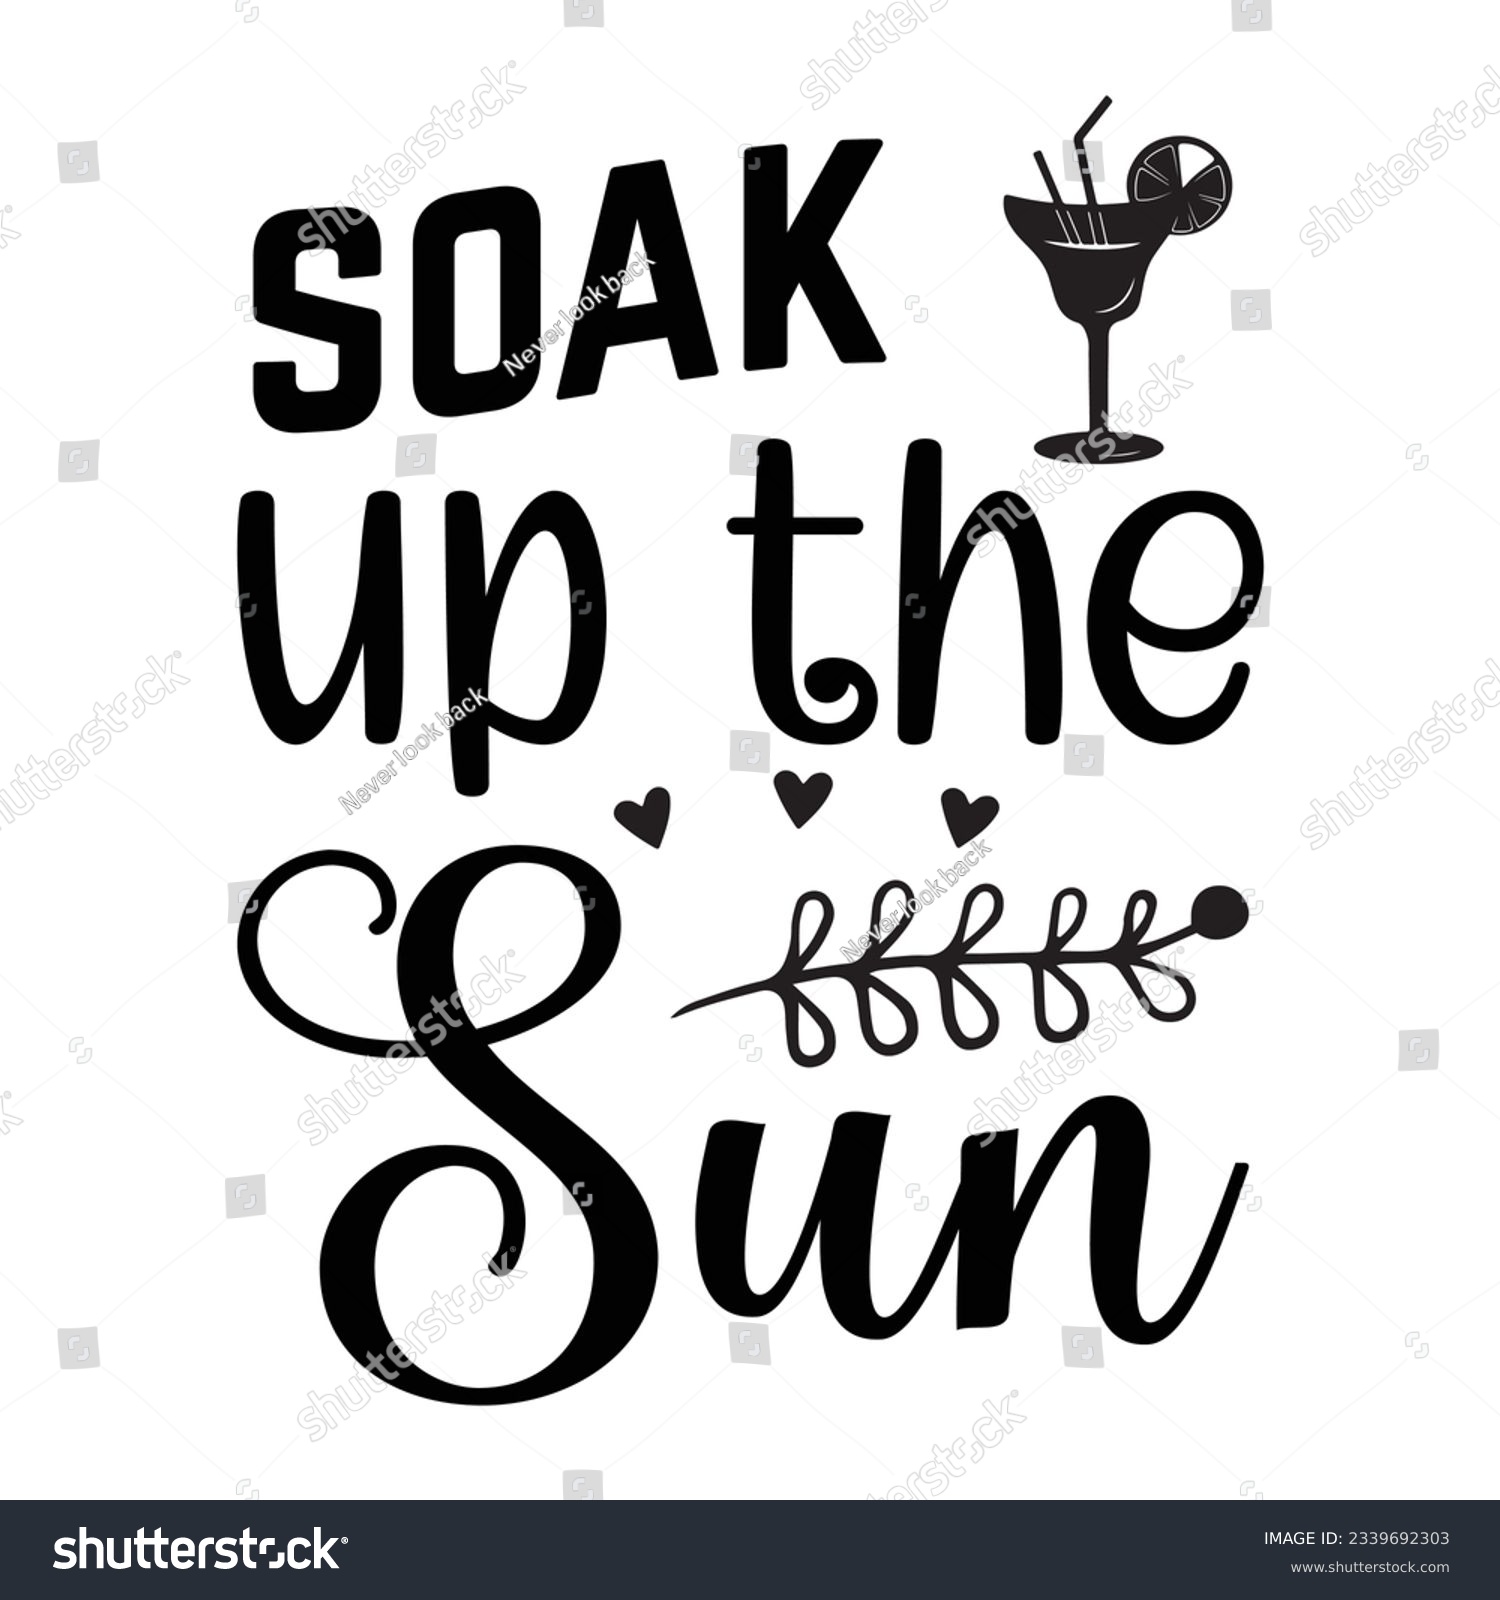 SVG of soak up the sun SVG t-shirt design, summer SVG, summer quotes , waves SVG, beach, summer time  SVG, Hand drawn vintage illustration with lettering and decoration elements
 svg